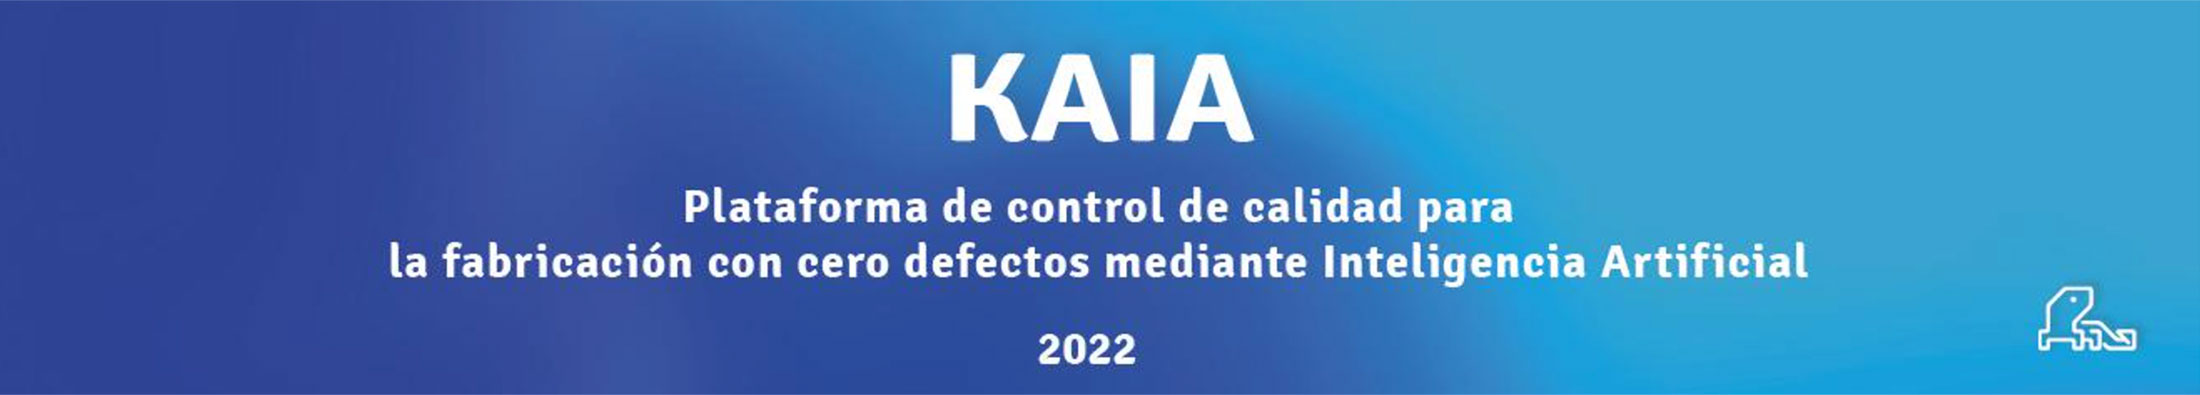 Kaia plataforma de control de calidad